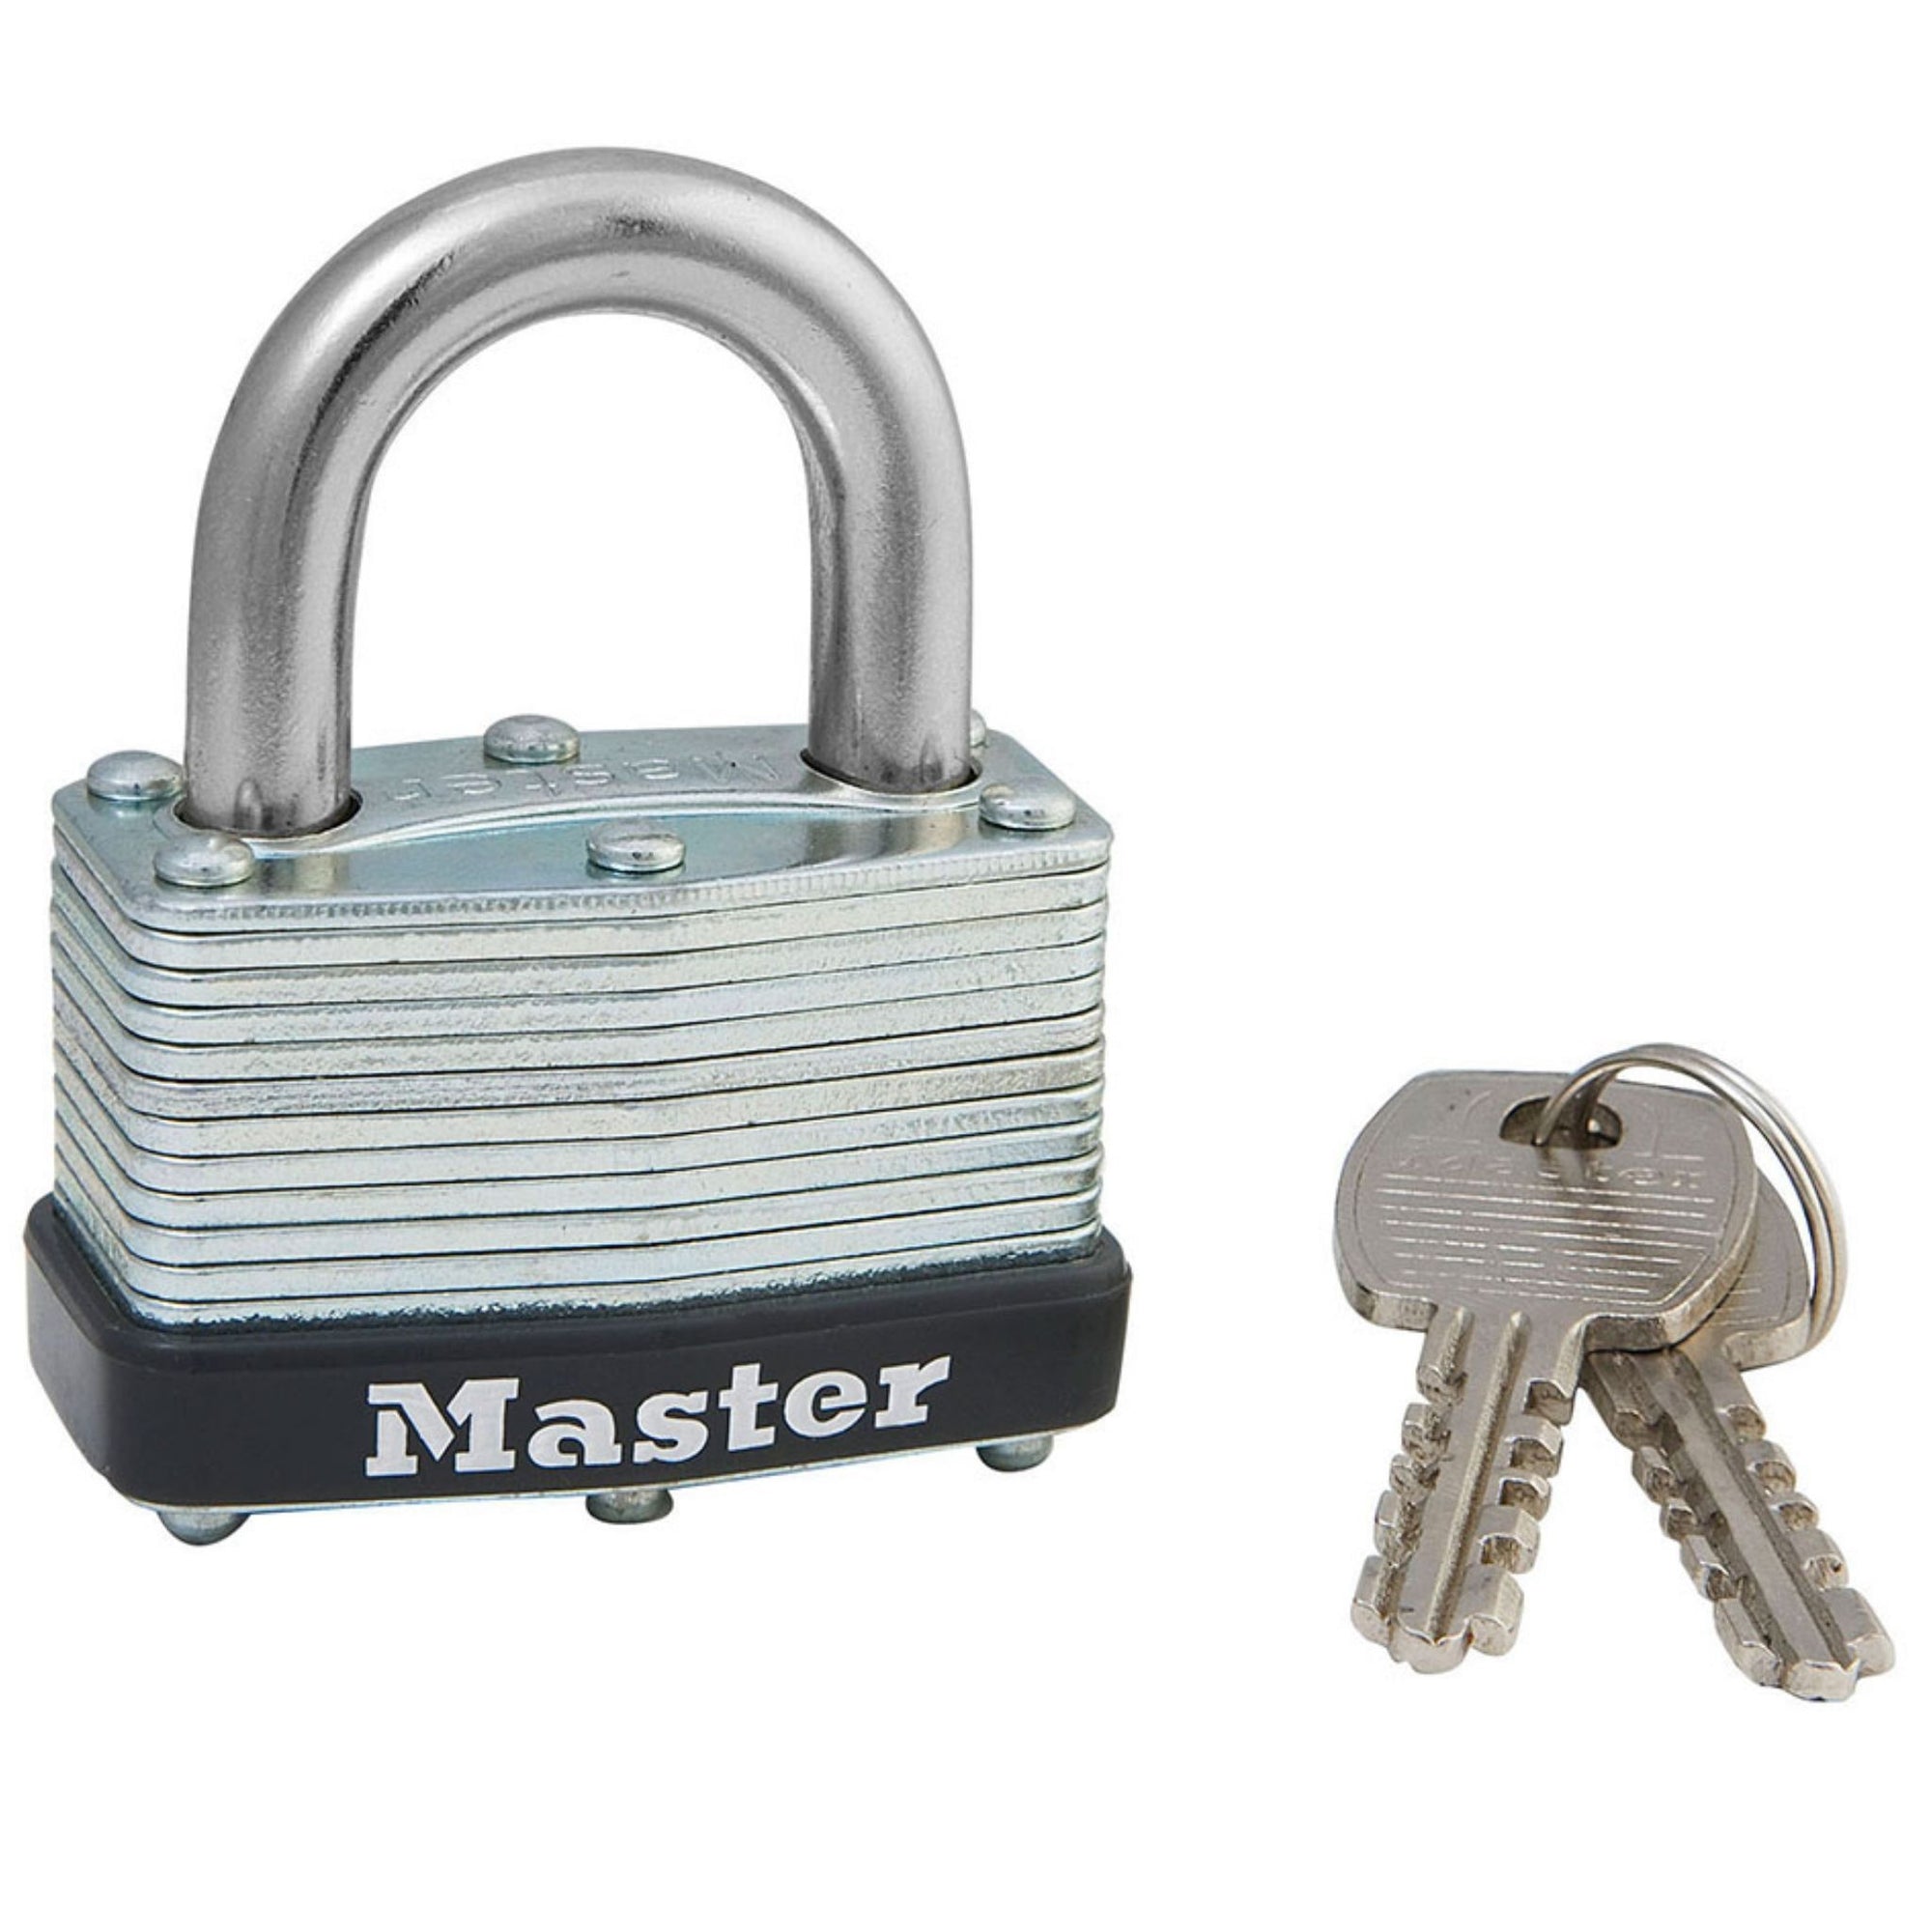 Master Lock 500KABRK 197 Warded Padlock with Breakaway Shackle Keyed Alike to Match Pre-Set KA197 Keys - The Lock Source